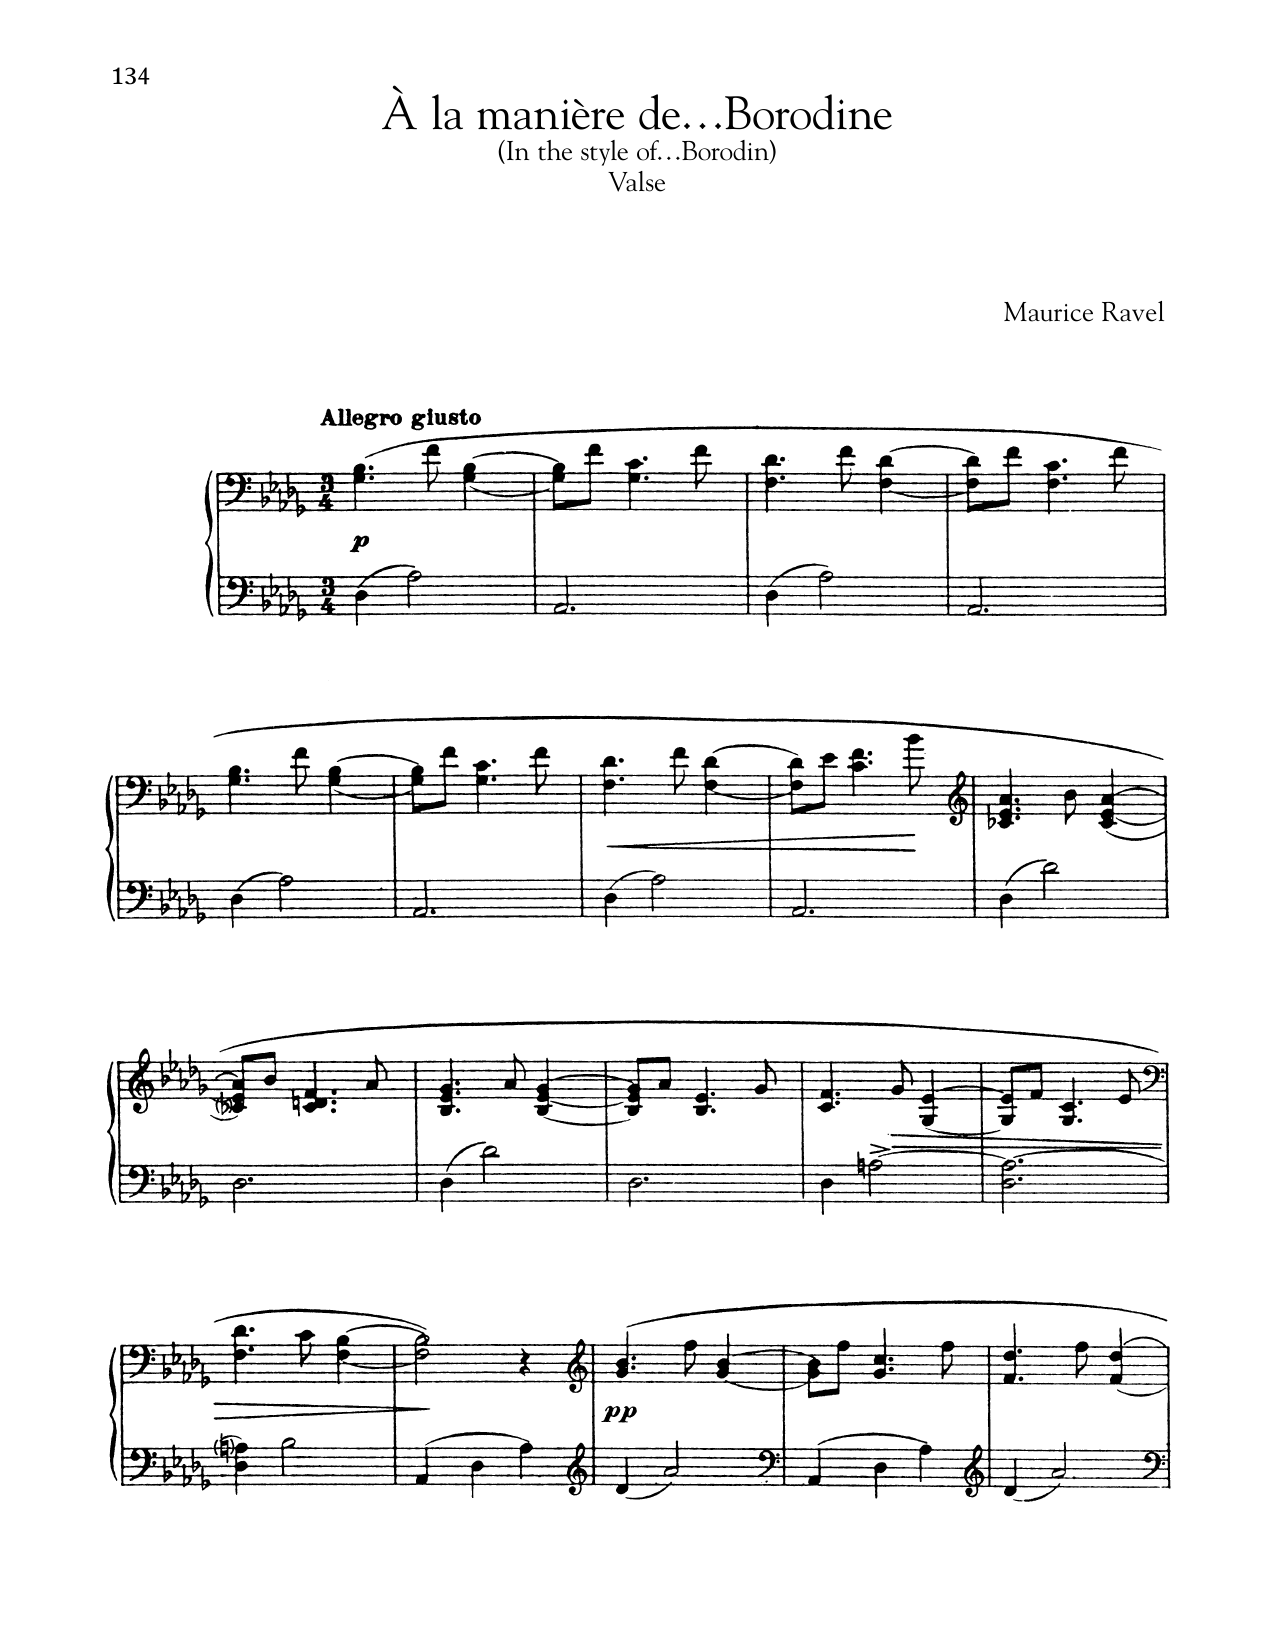 Maurice Ravel A La Maniere De Borodine (Valse) Sheet Music Notes & Chords for Piano - Download or Print PDF